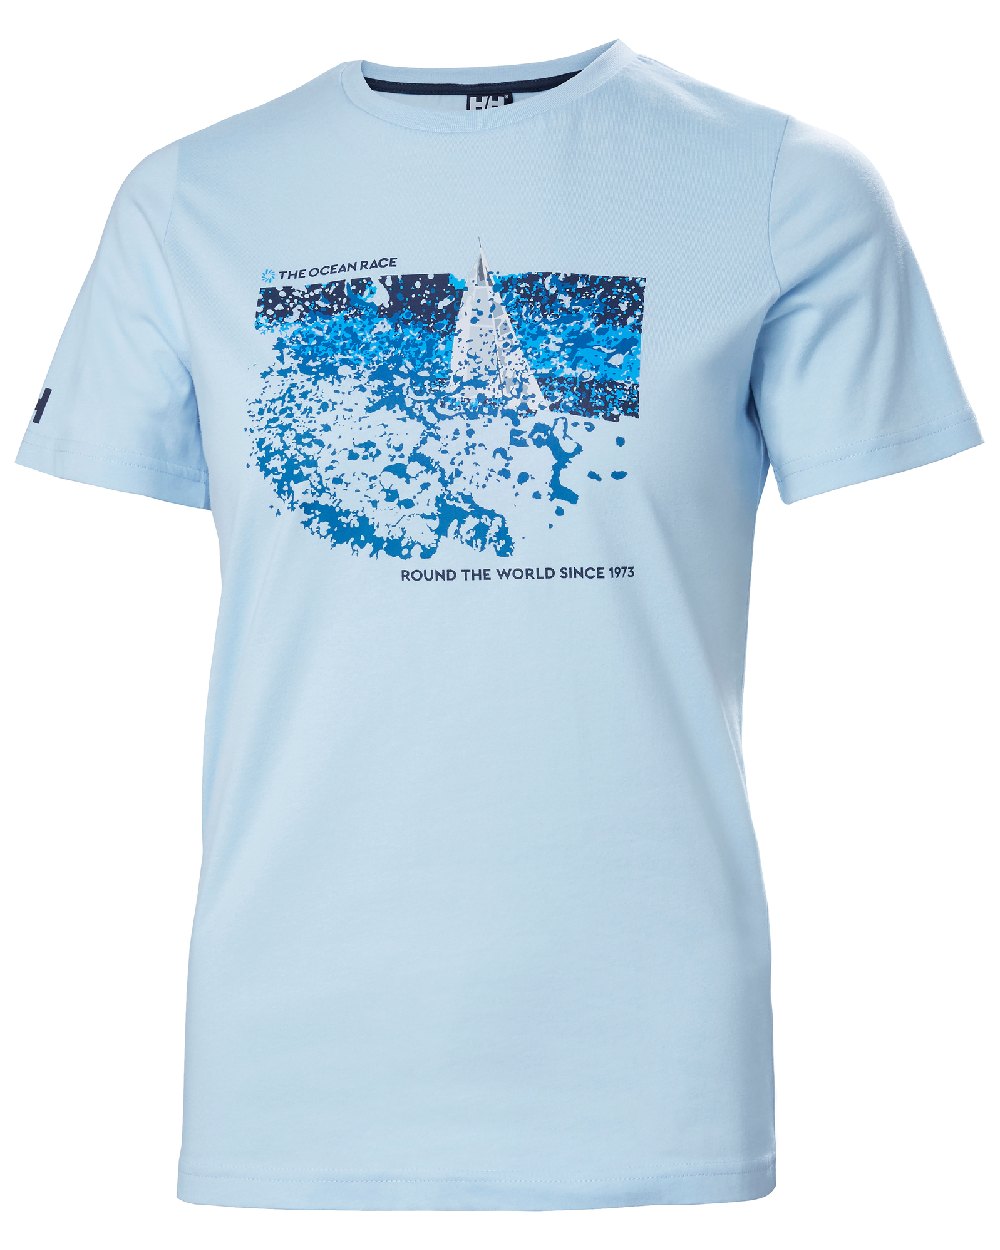 Pinnacle Blue coloured Helly Hansen Womens Ocean Race T-Shirt on white background 